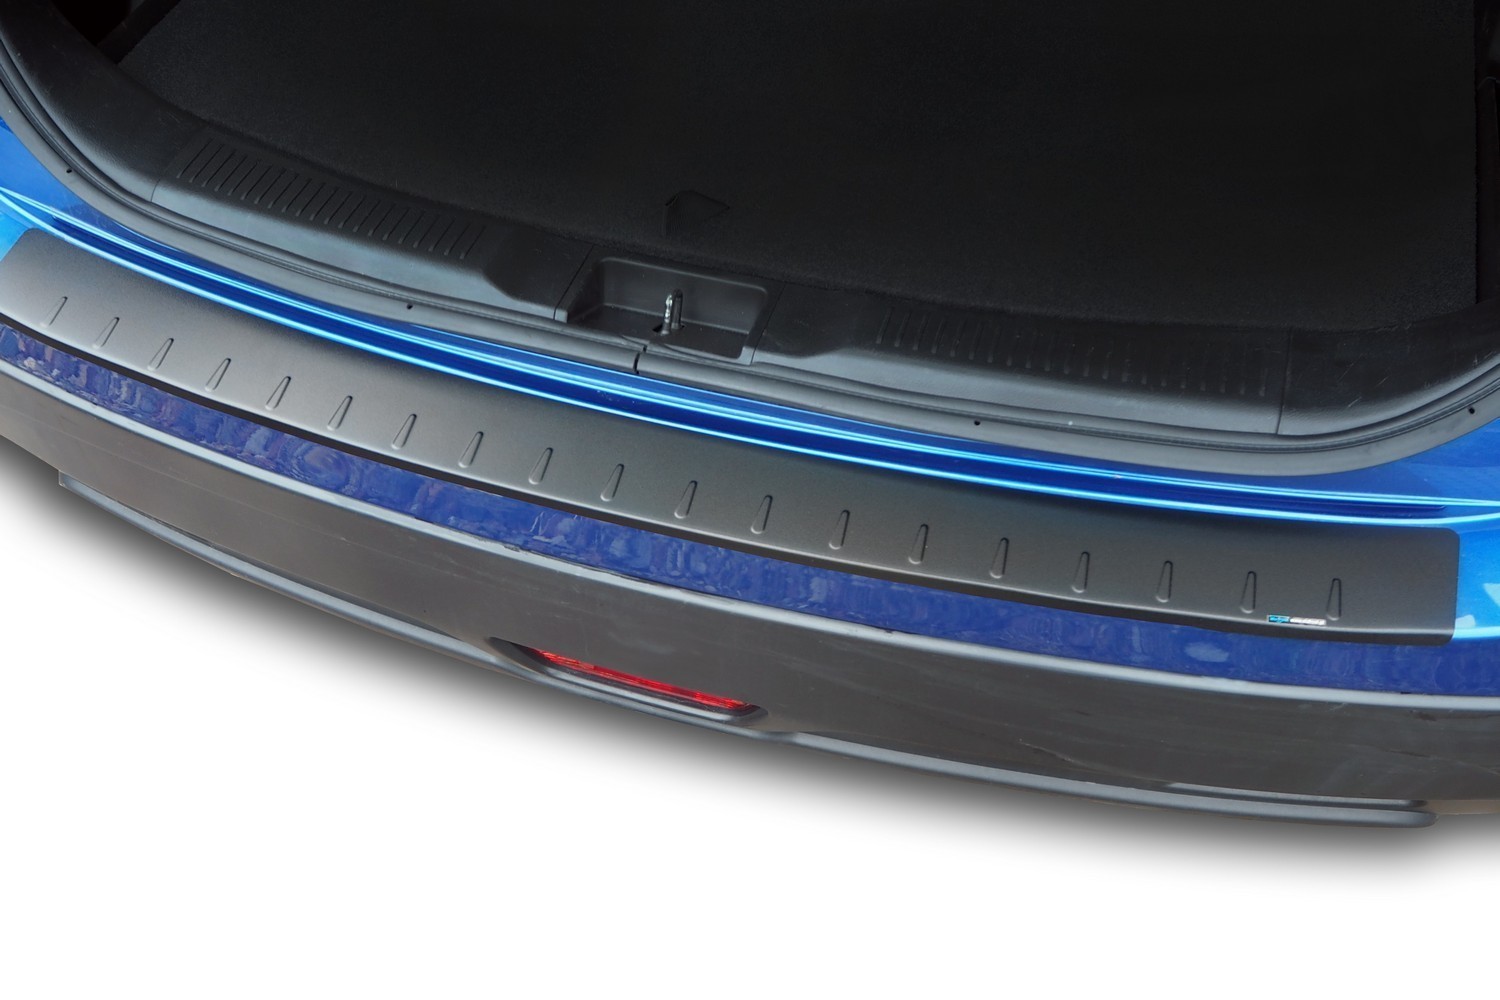 Ladekantenschutz Suzuki SX4 S-Cross Edelstahl - Carbon Folie |  CarParts-Expert